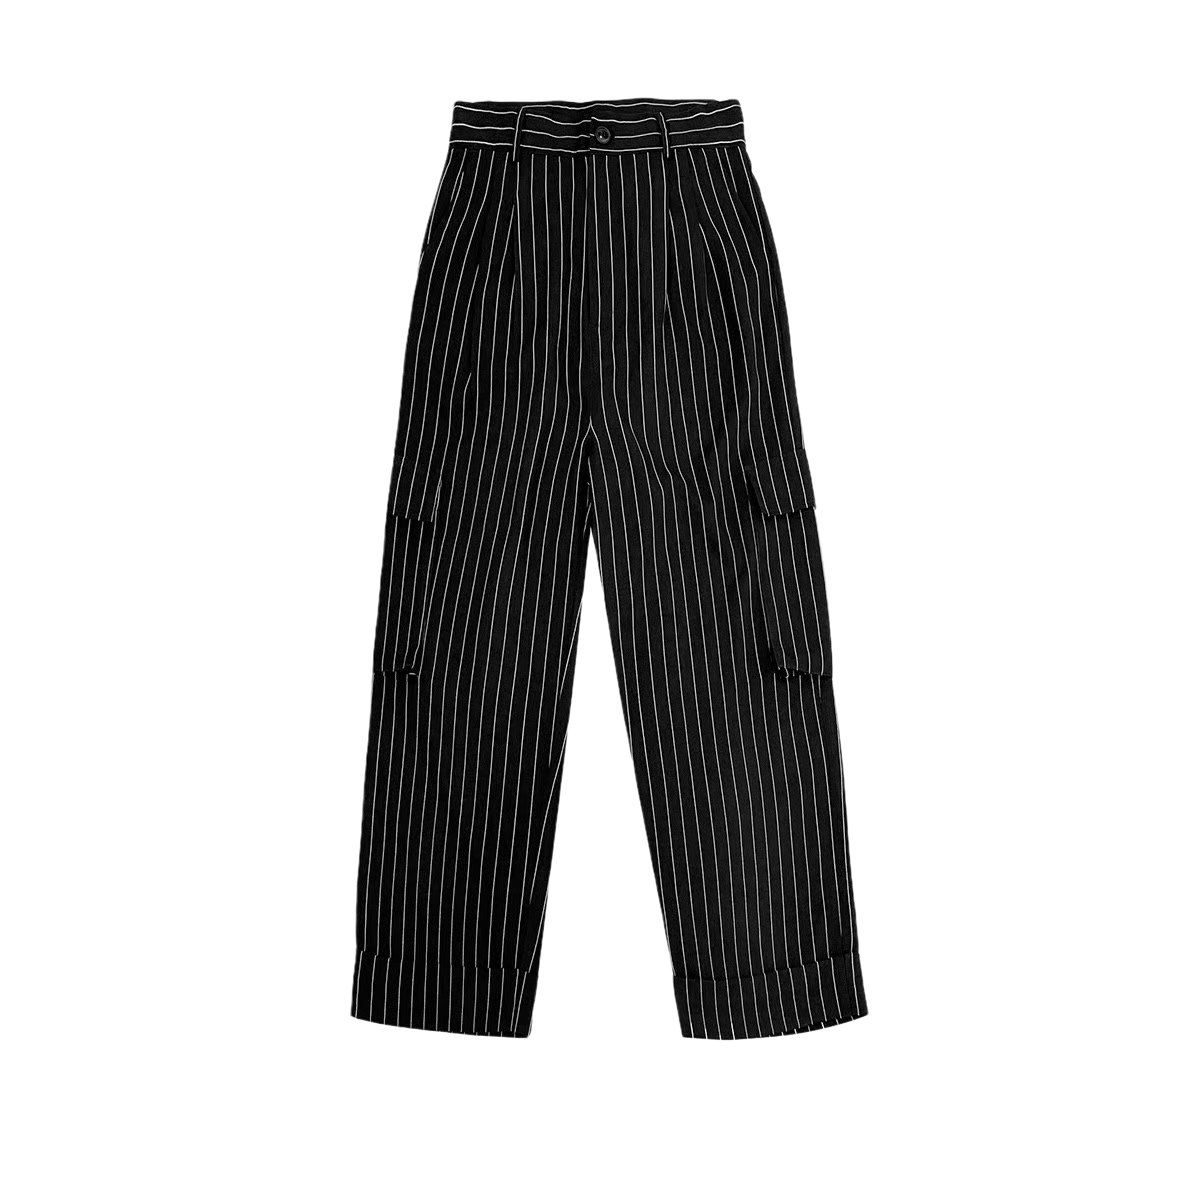 Casual Striped Pants (Black Striped)